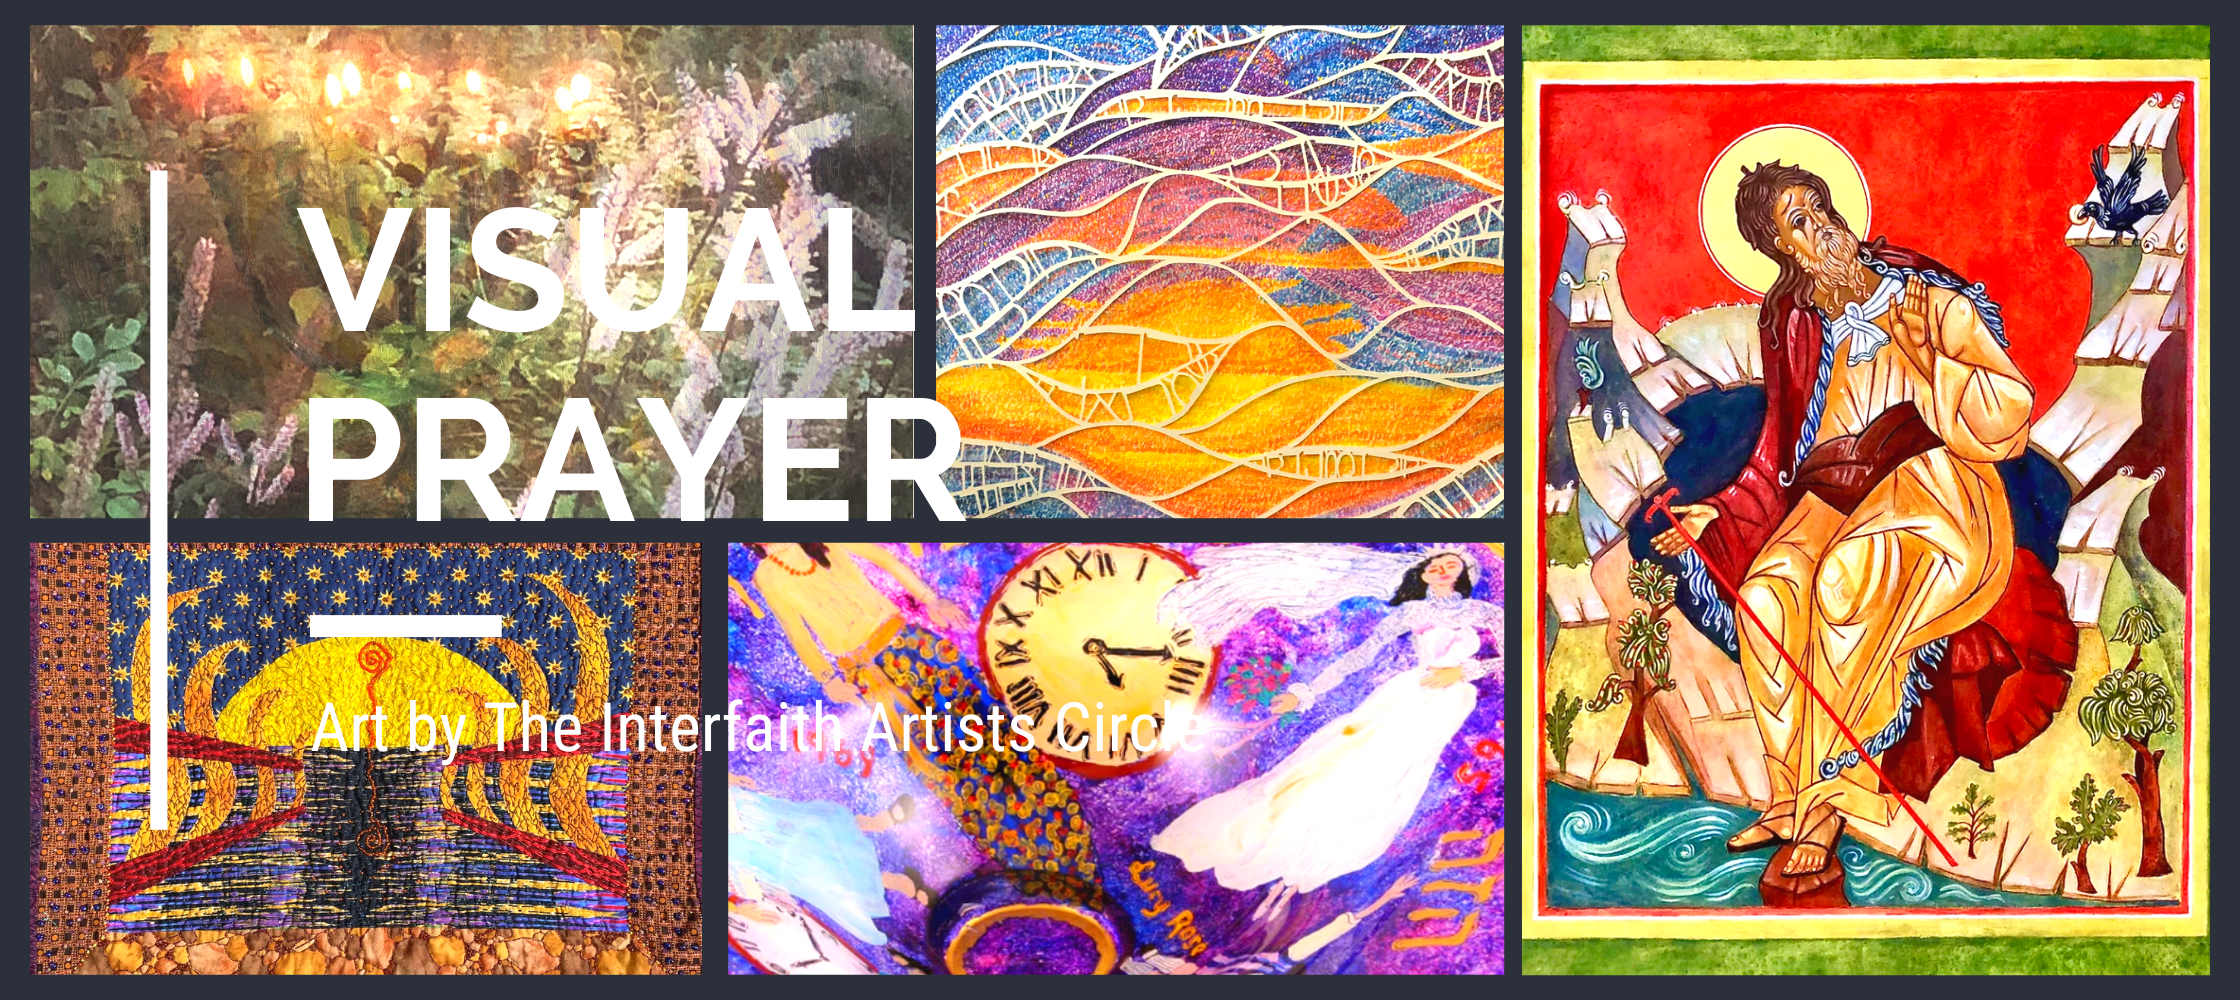 Visual Prayer: The Interfaith Artists Circle